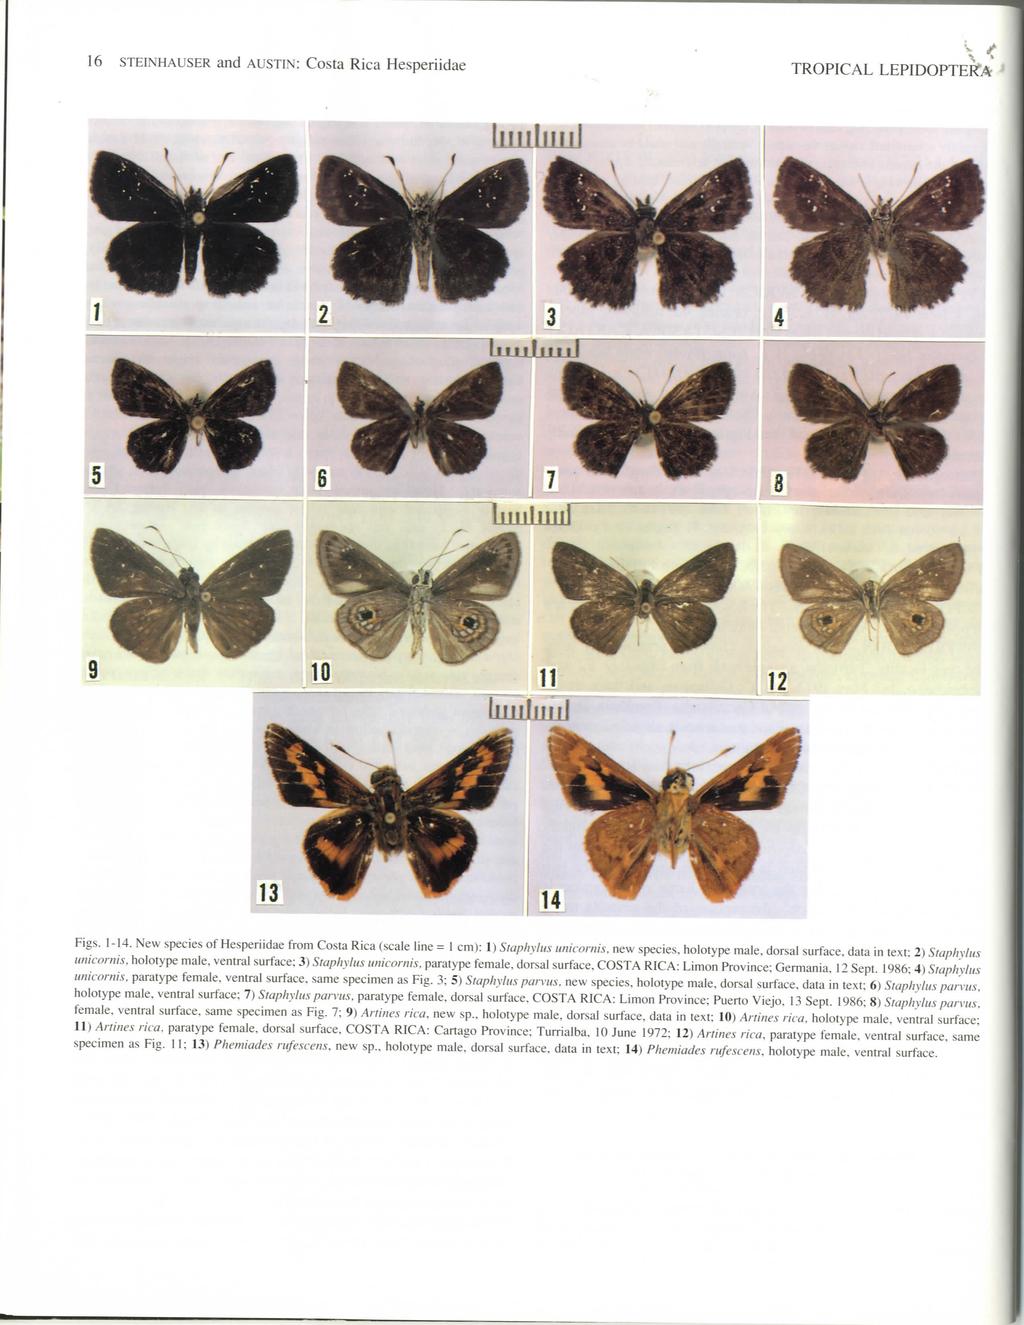 v< 16 STEINHAUSER and AUSTIN: Costa Rica Hesperiidae TROPICAL LEPIDOPTERA IllllllLLLl 11 lillllujlj 12 Figs. 1-14.